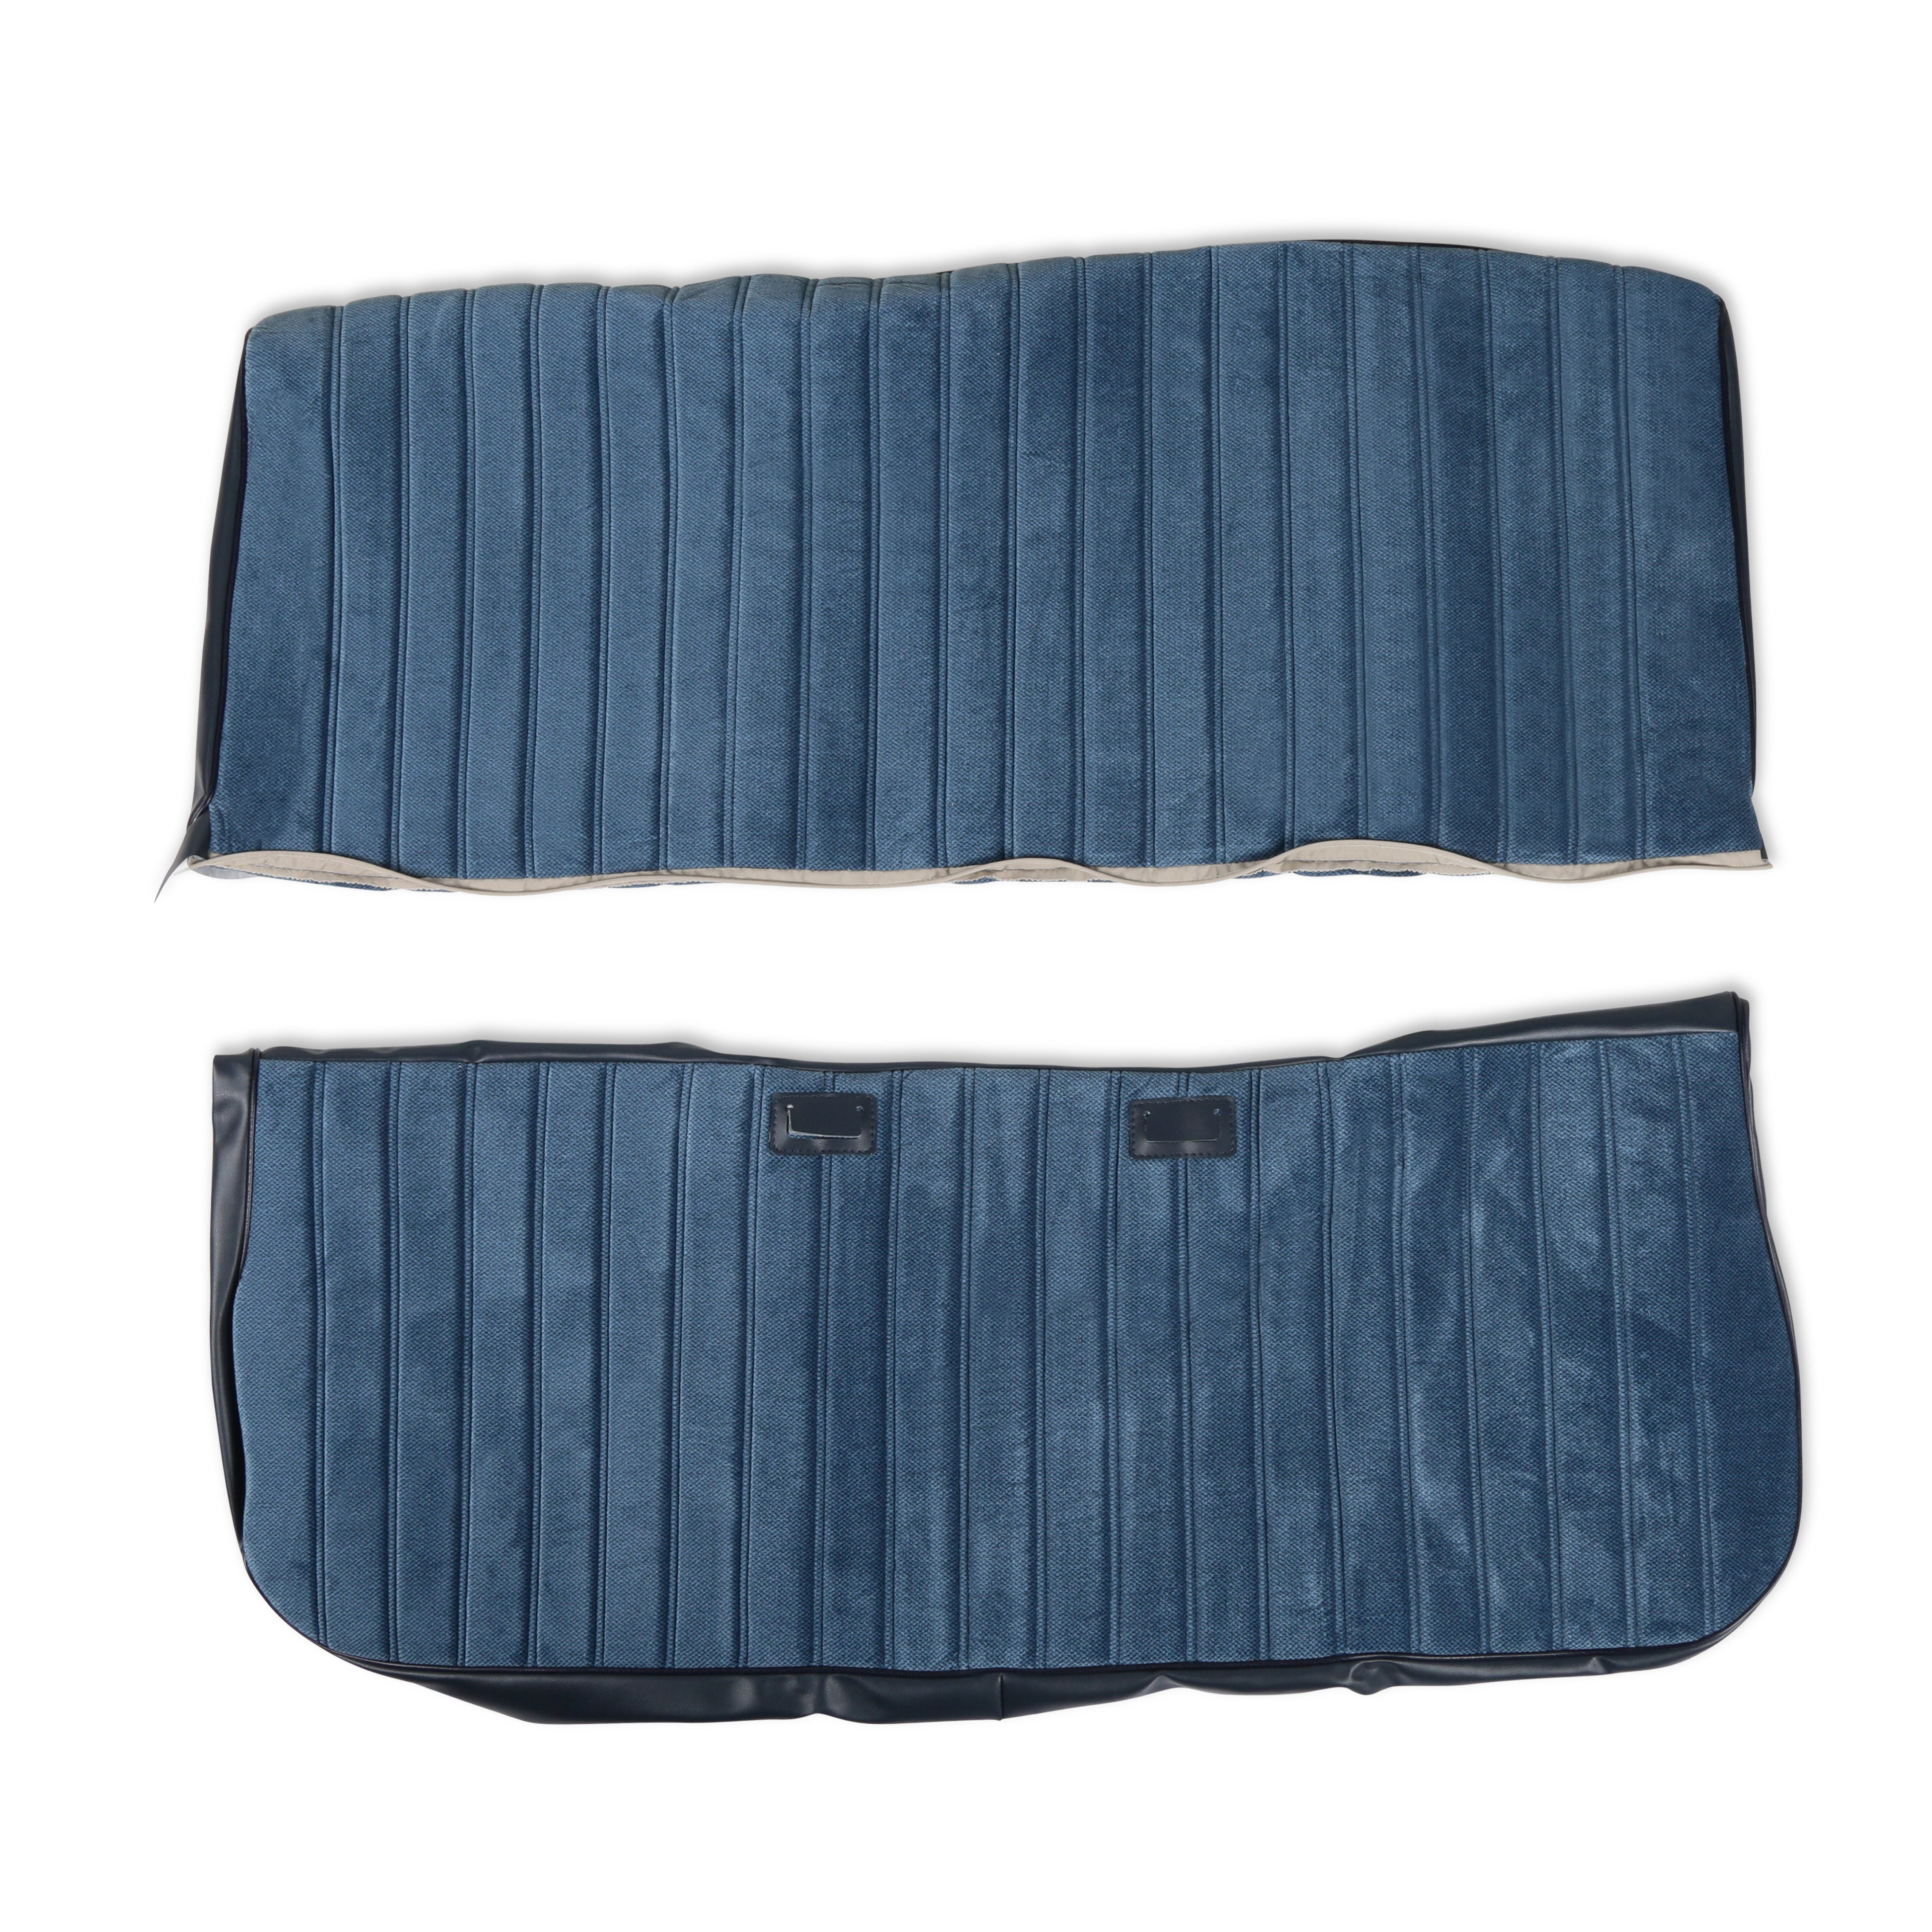 BROTHERS C/K Seat Upholstery Kit - Full Pleat Cloth/Vinyl - Navy pn 05-297